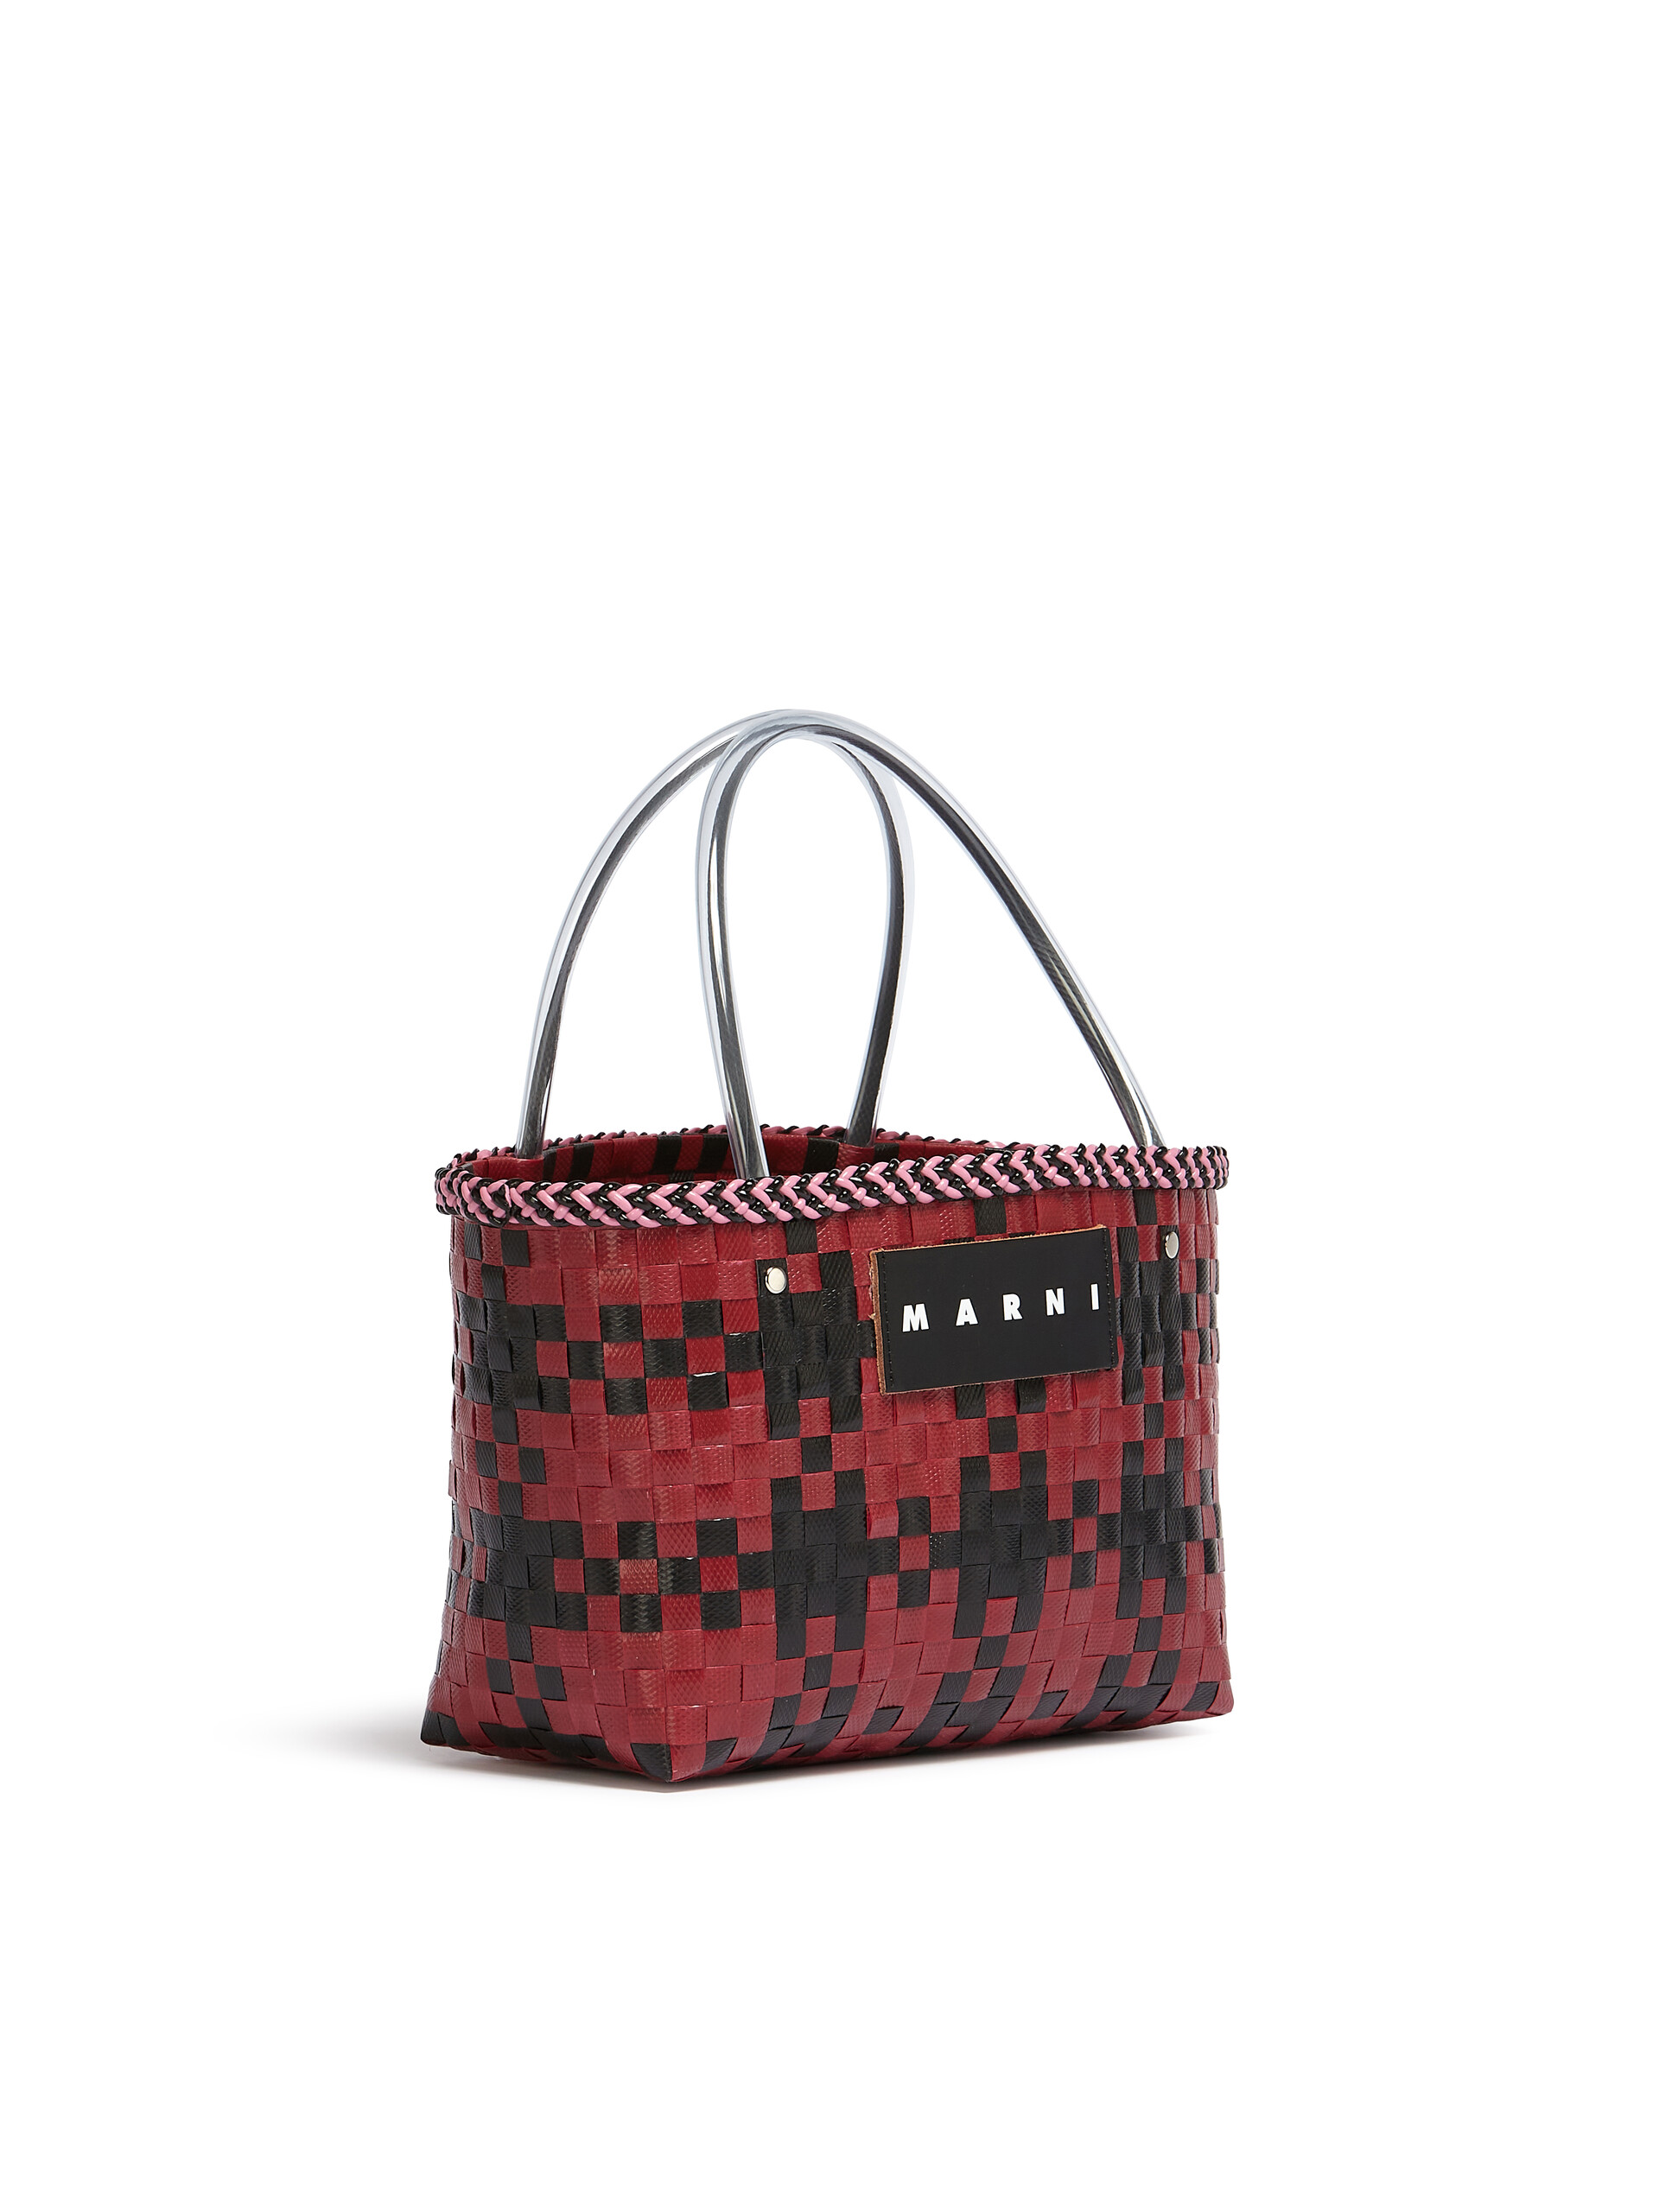 MARNI MARKET CHECK BAG in burgundy tartan woven material - Shopping Bags - Image 2